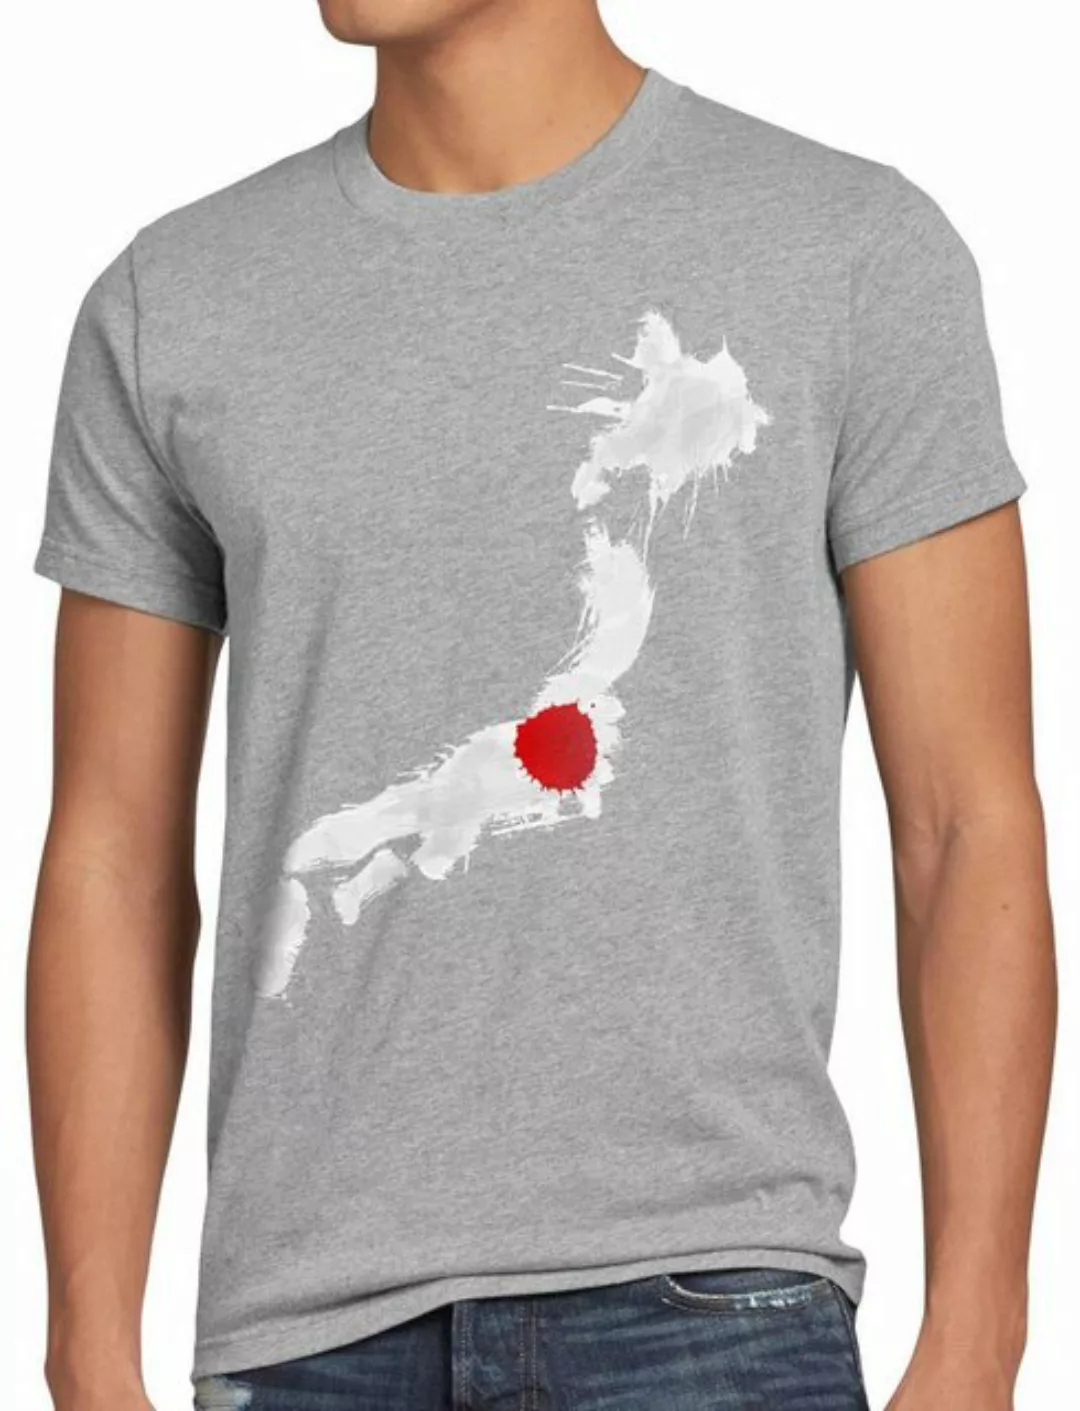 style3 Print-Shirt Herren T-Shirt Flagge Japan Fußball Sport Nihon WM EM Fa günstig online kaufen